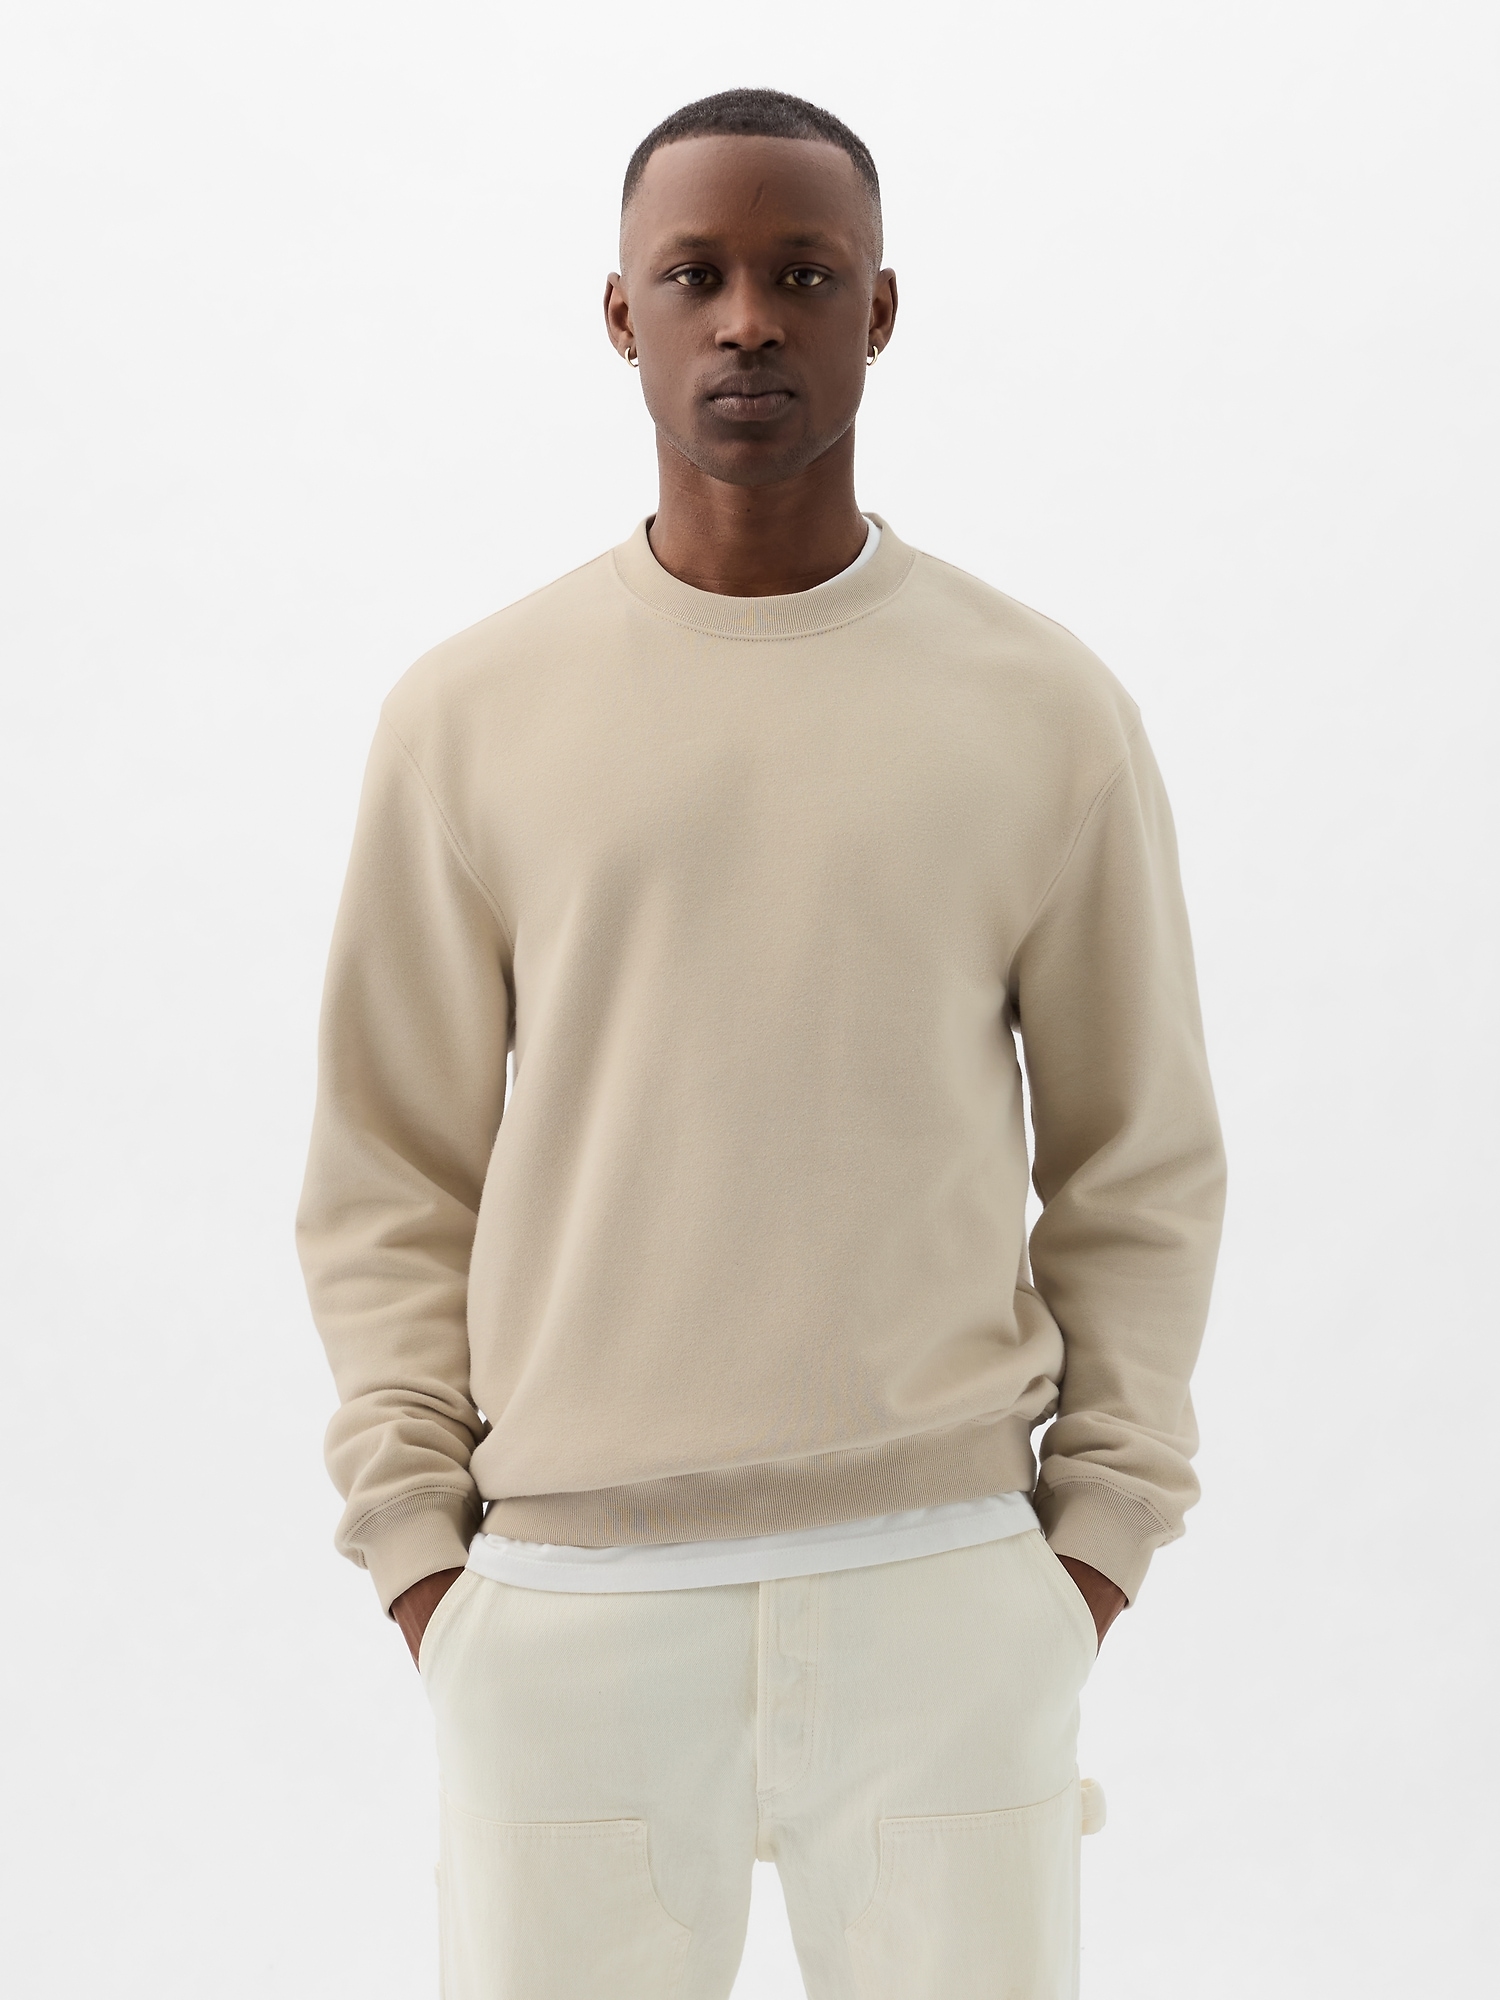 Men's Vintage Soft Crewneck Sweatshirt by Gap Beige Size XL